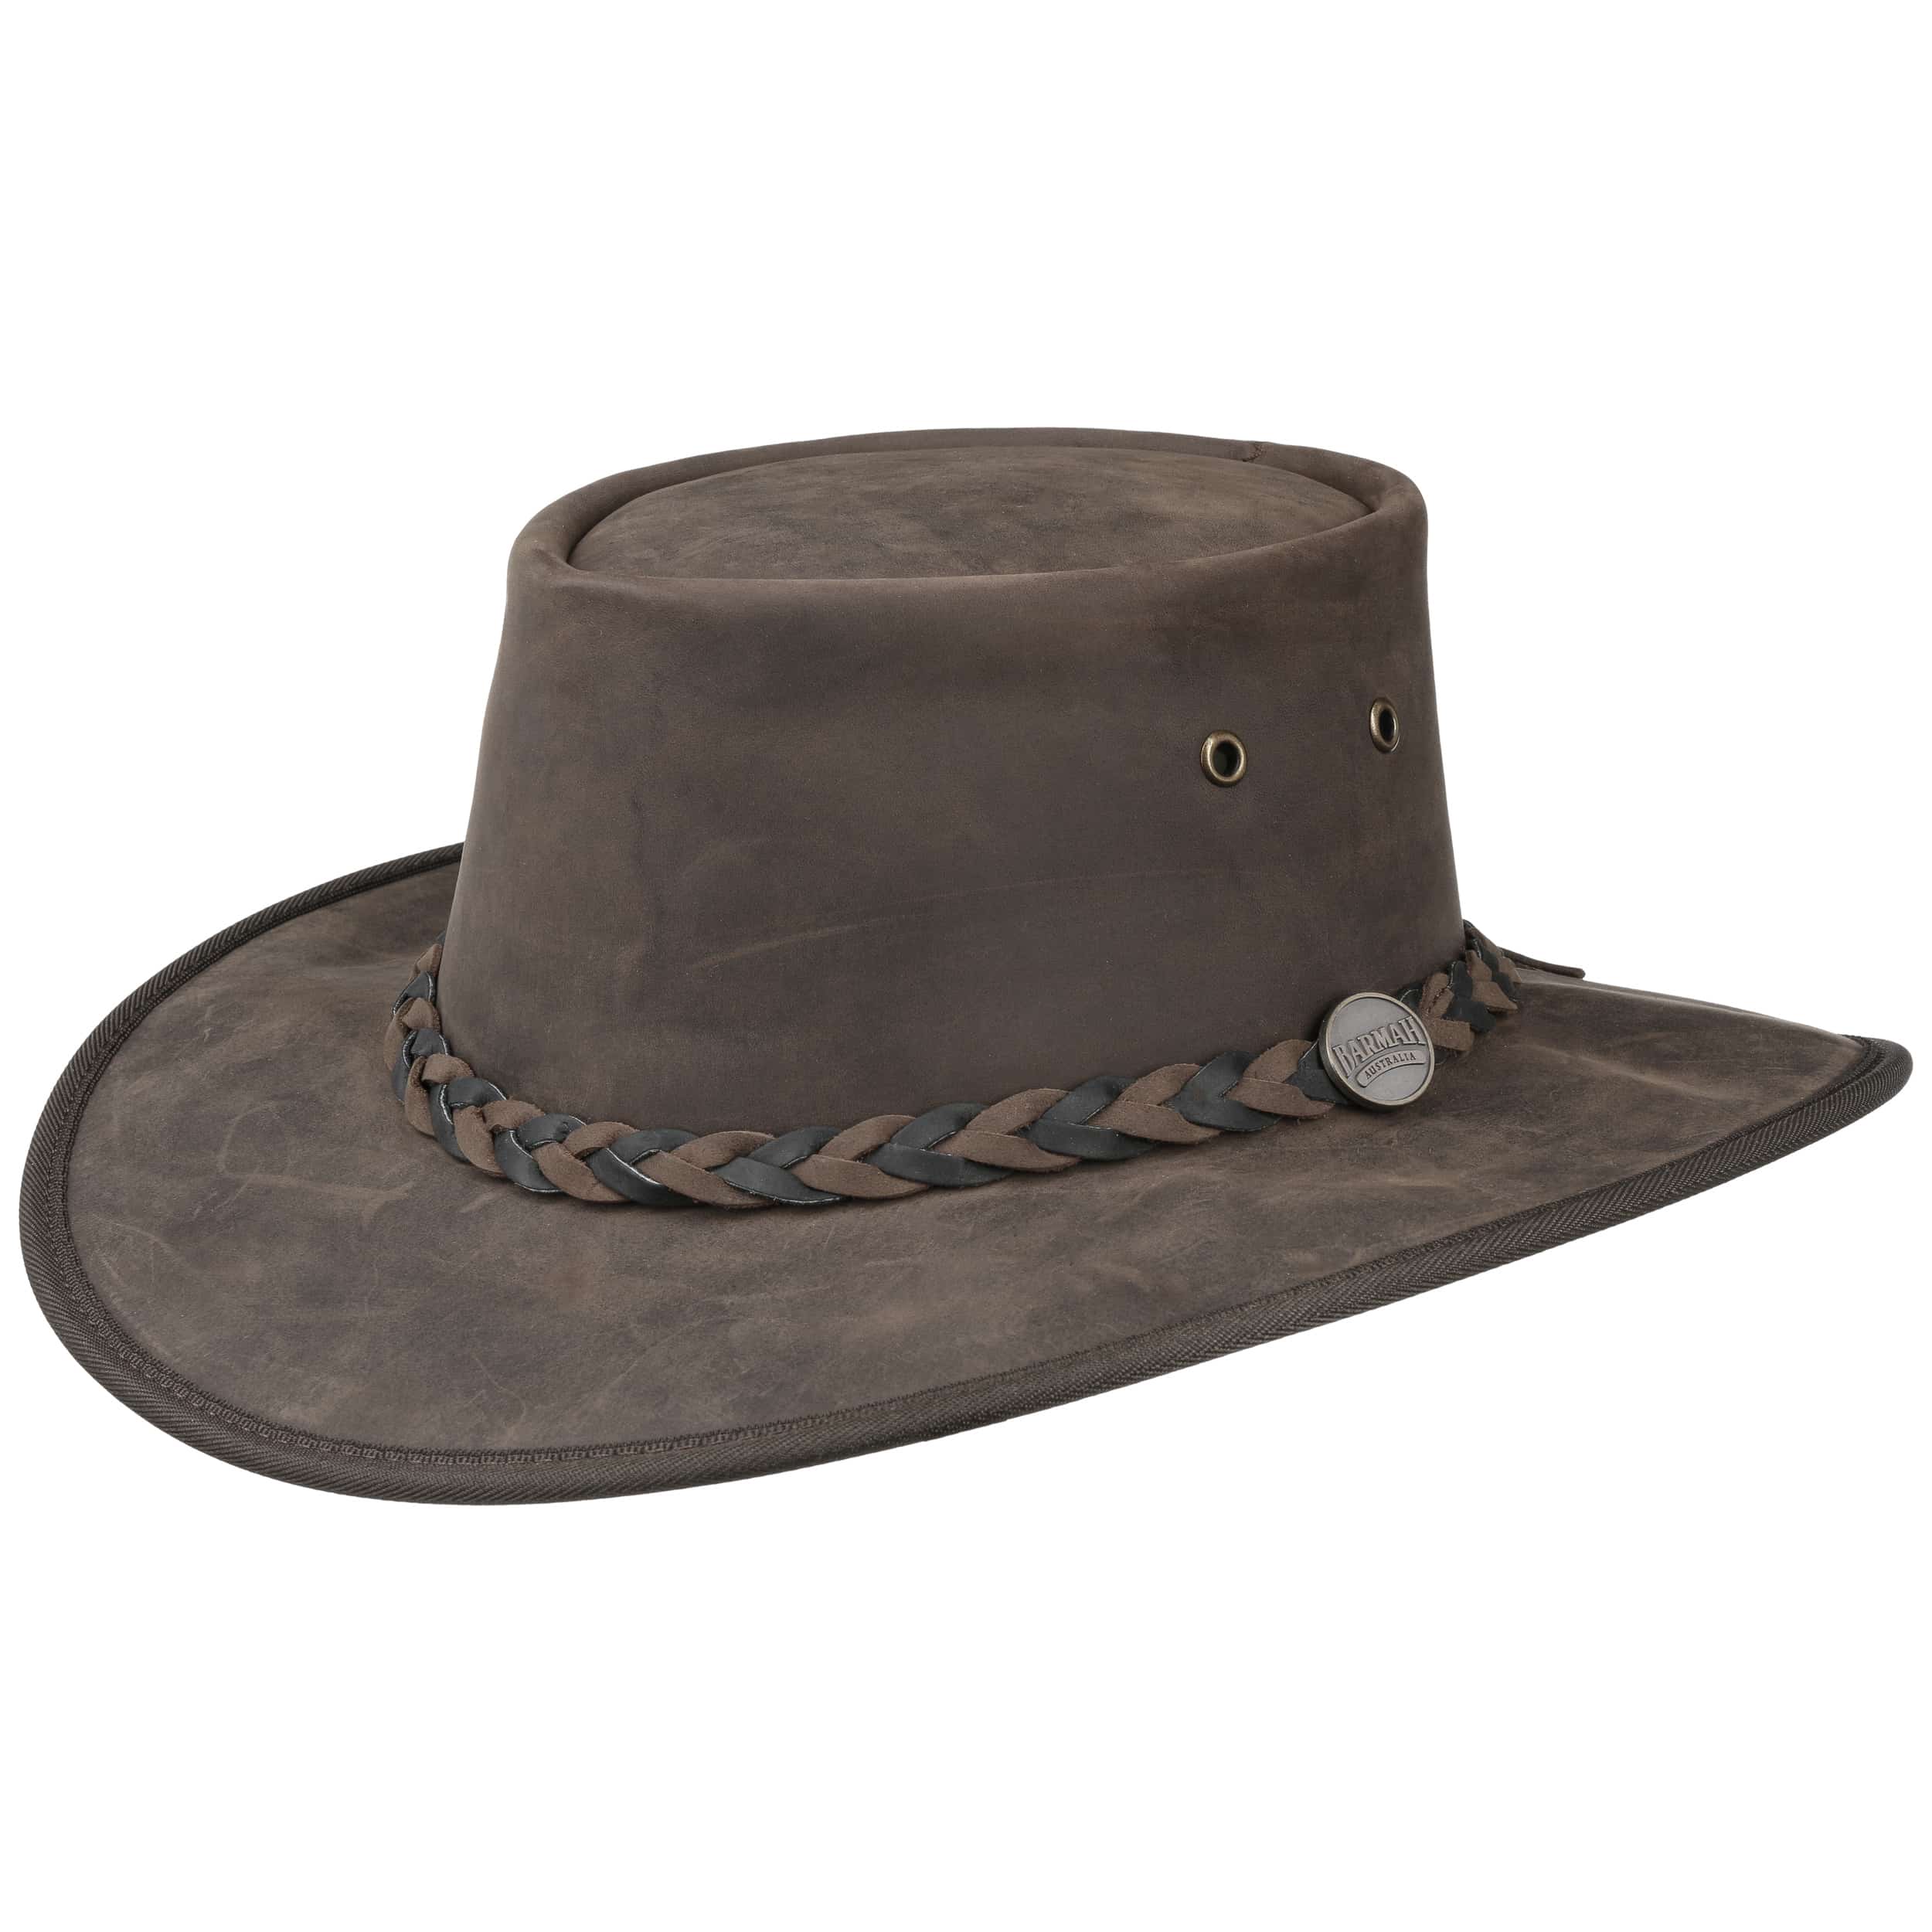 BARMAH Squashy Australischer Leder Hut Outback Hat Outdoorhut knautschbar braun